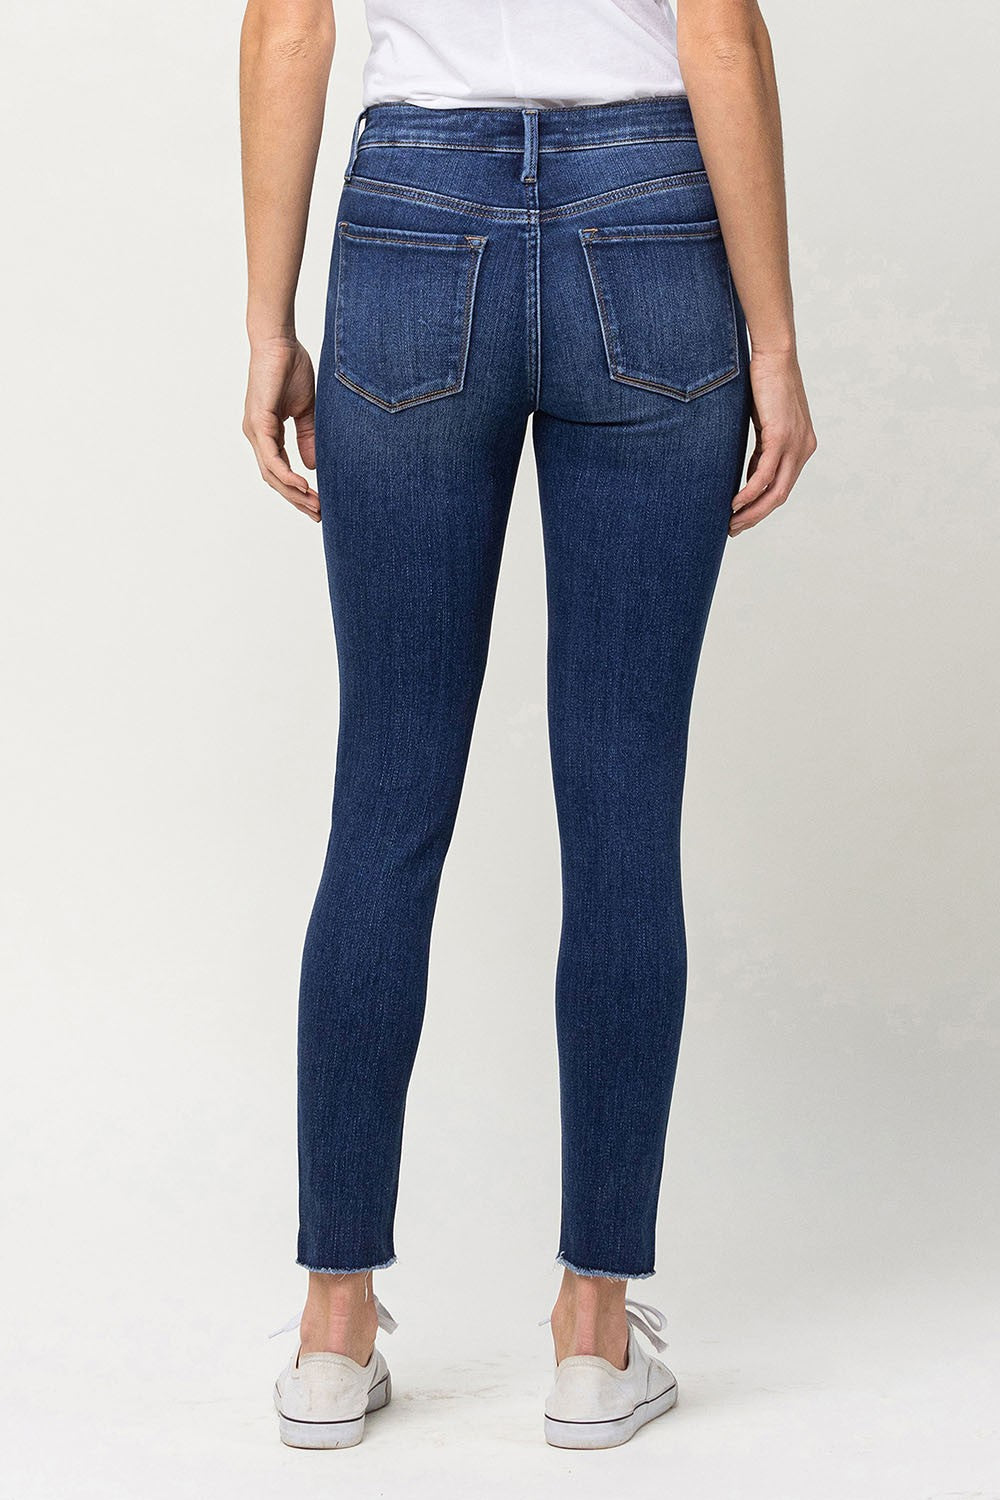 The Vervet Amber Mid Rise Crop Skinny Jeans